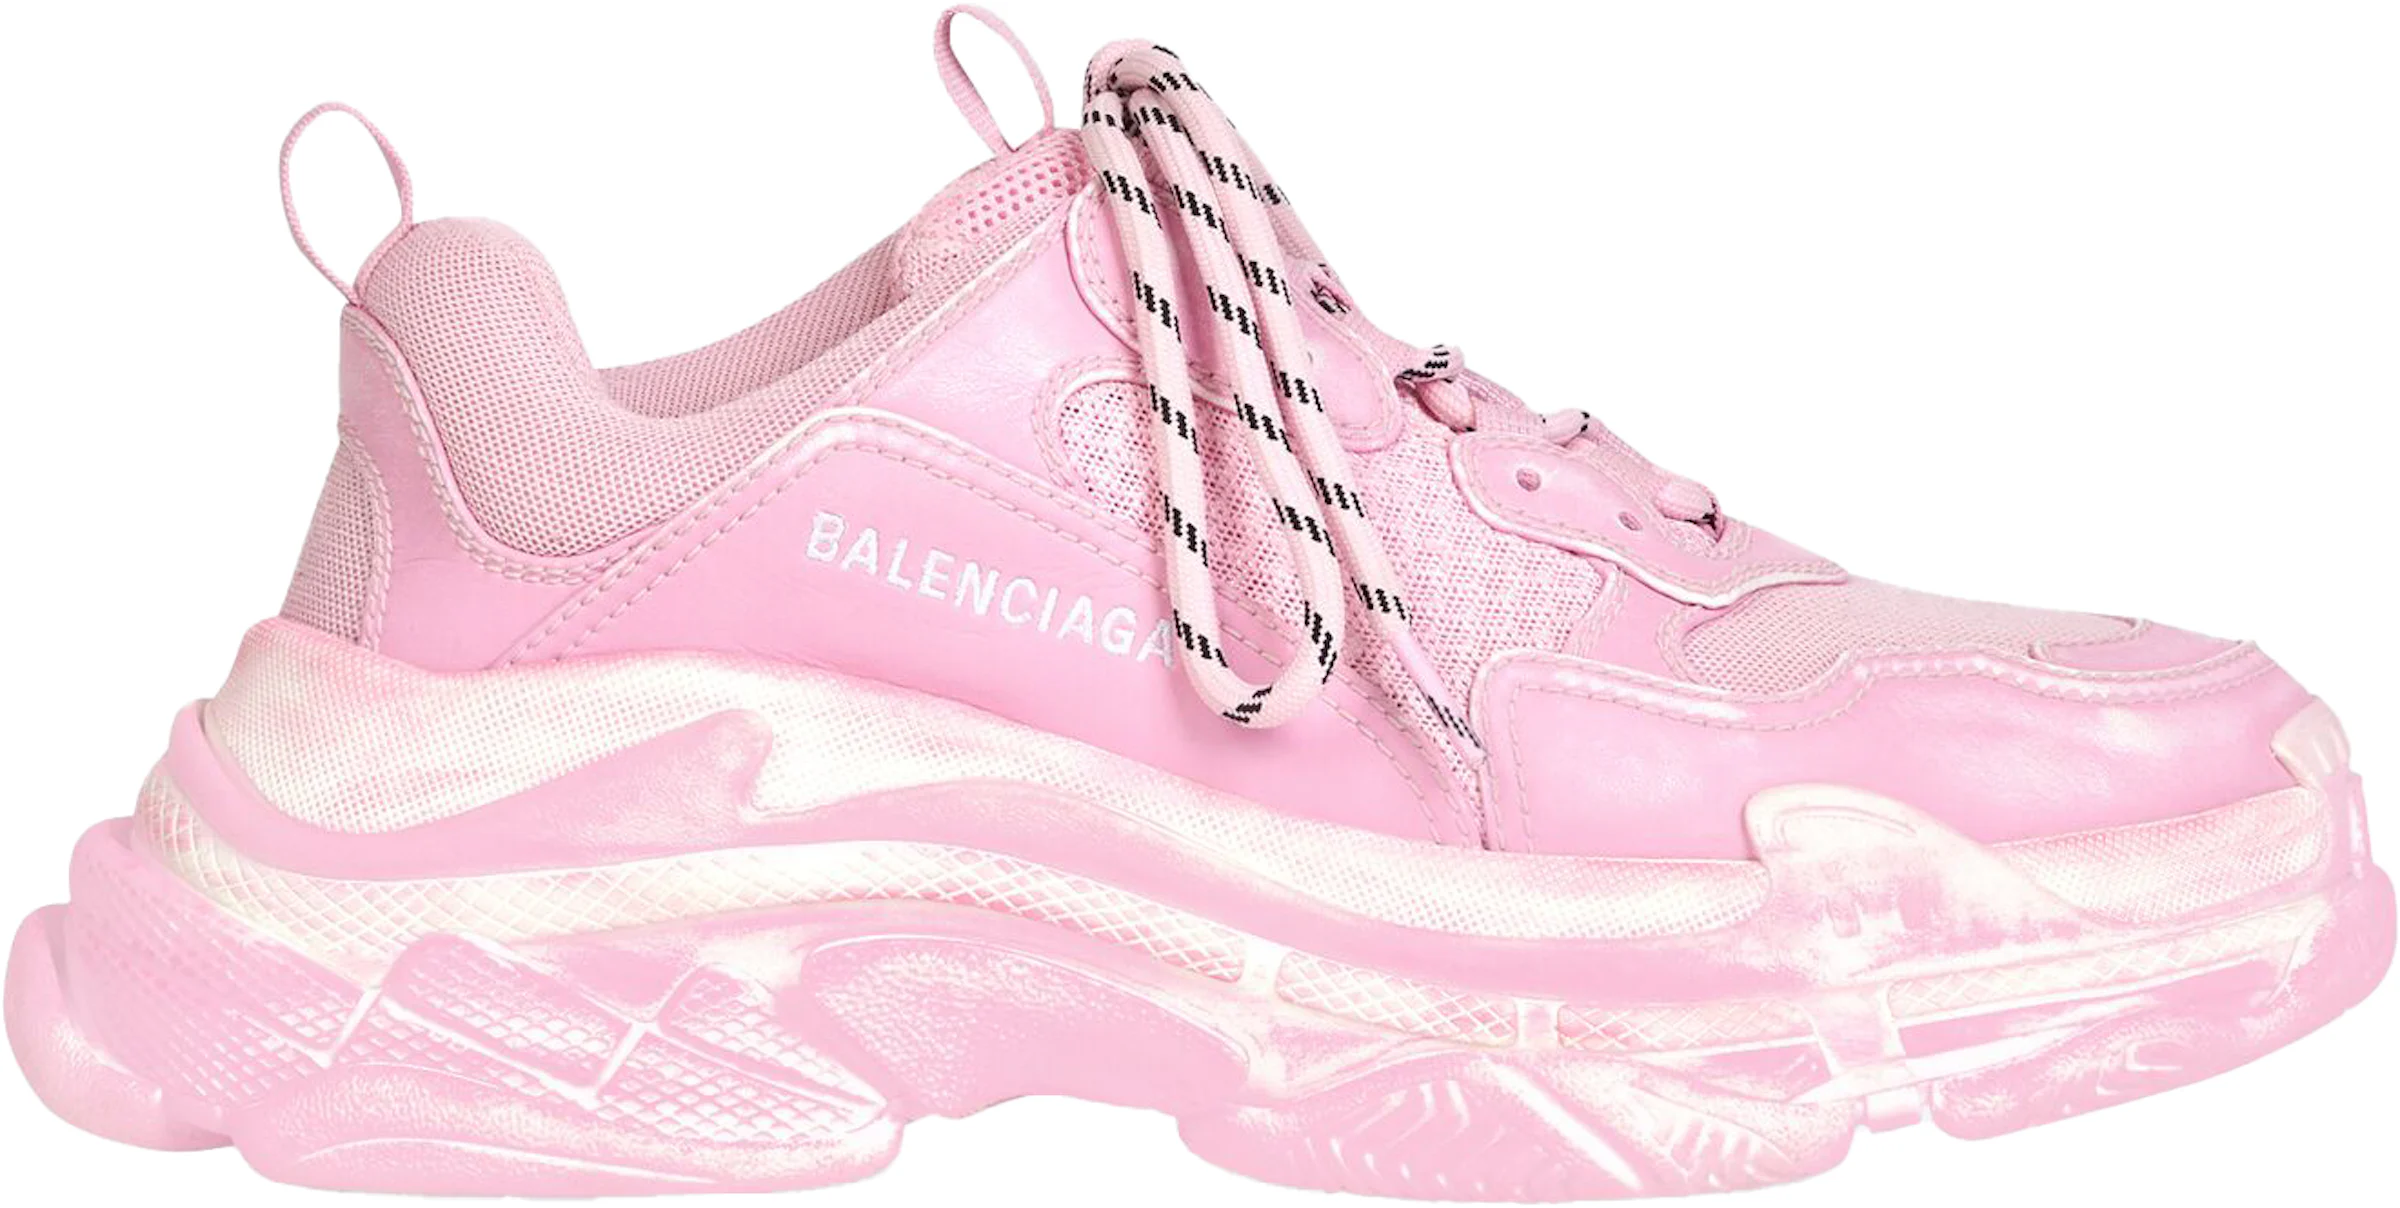 Balenciaga Triple S Faded Pink (Women's) - 524039W3CN35000 - US